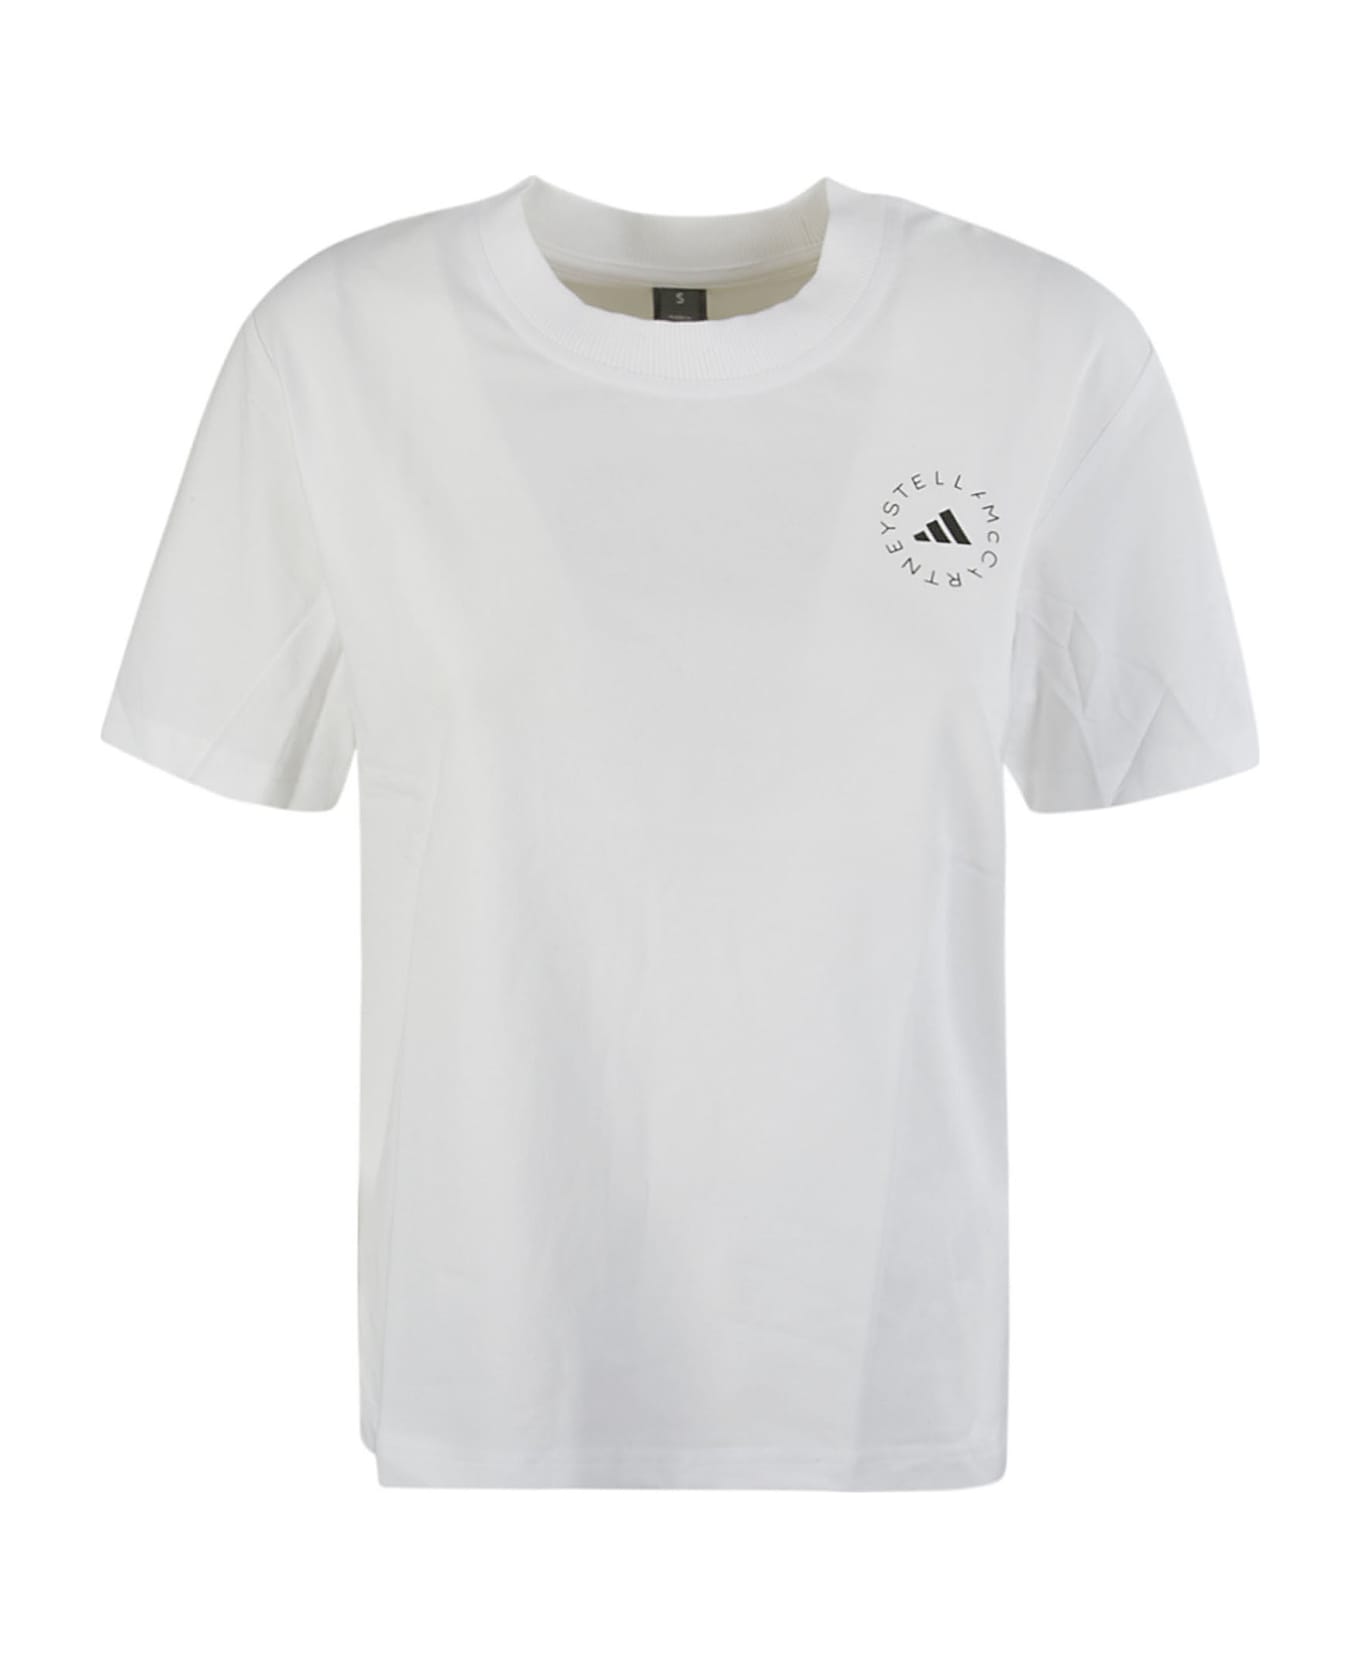 Adidas by Stella McCartney T-shirt Hr9167 - WHITE Tシャツ